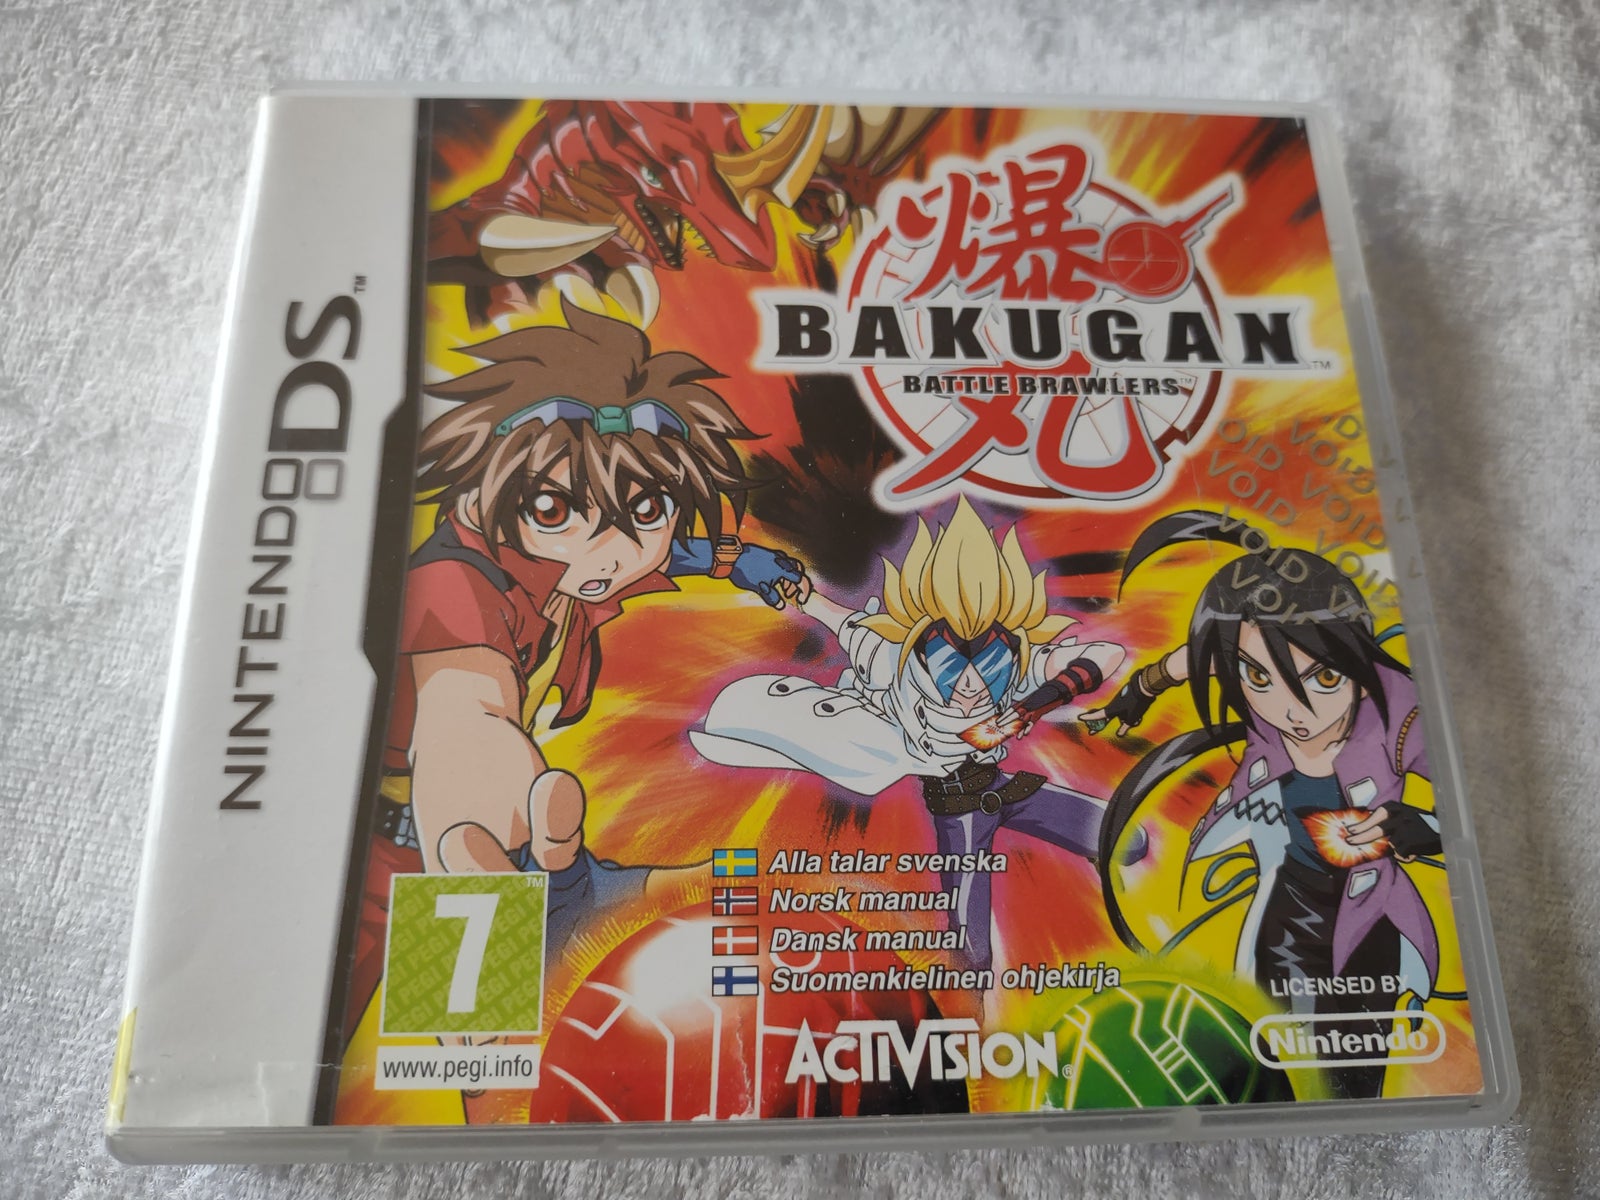 Bakugan Batle brawlers, Nintendo DS